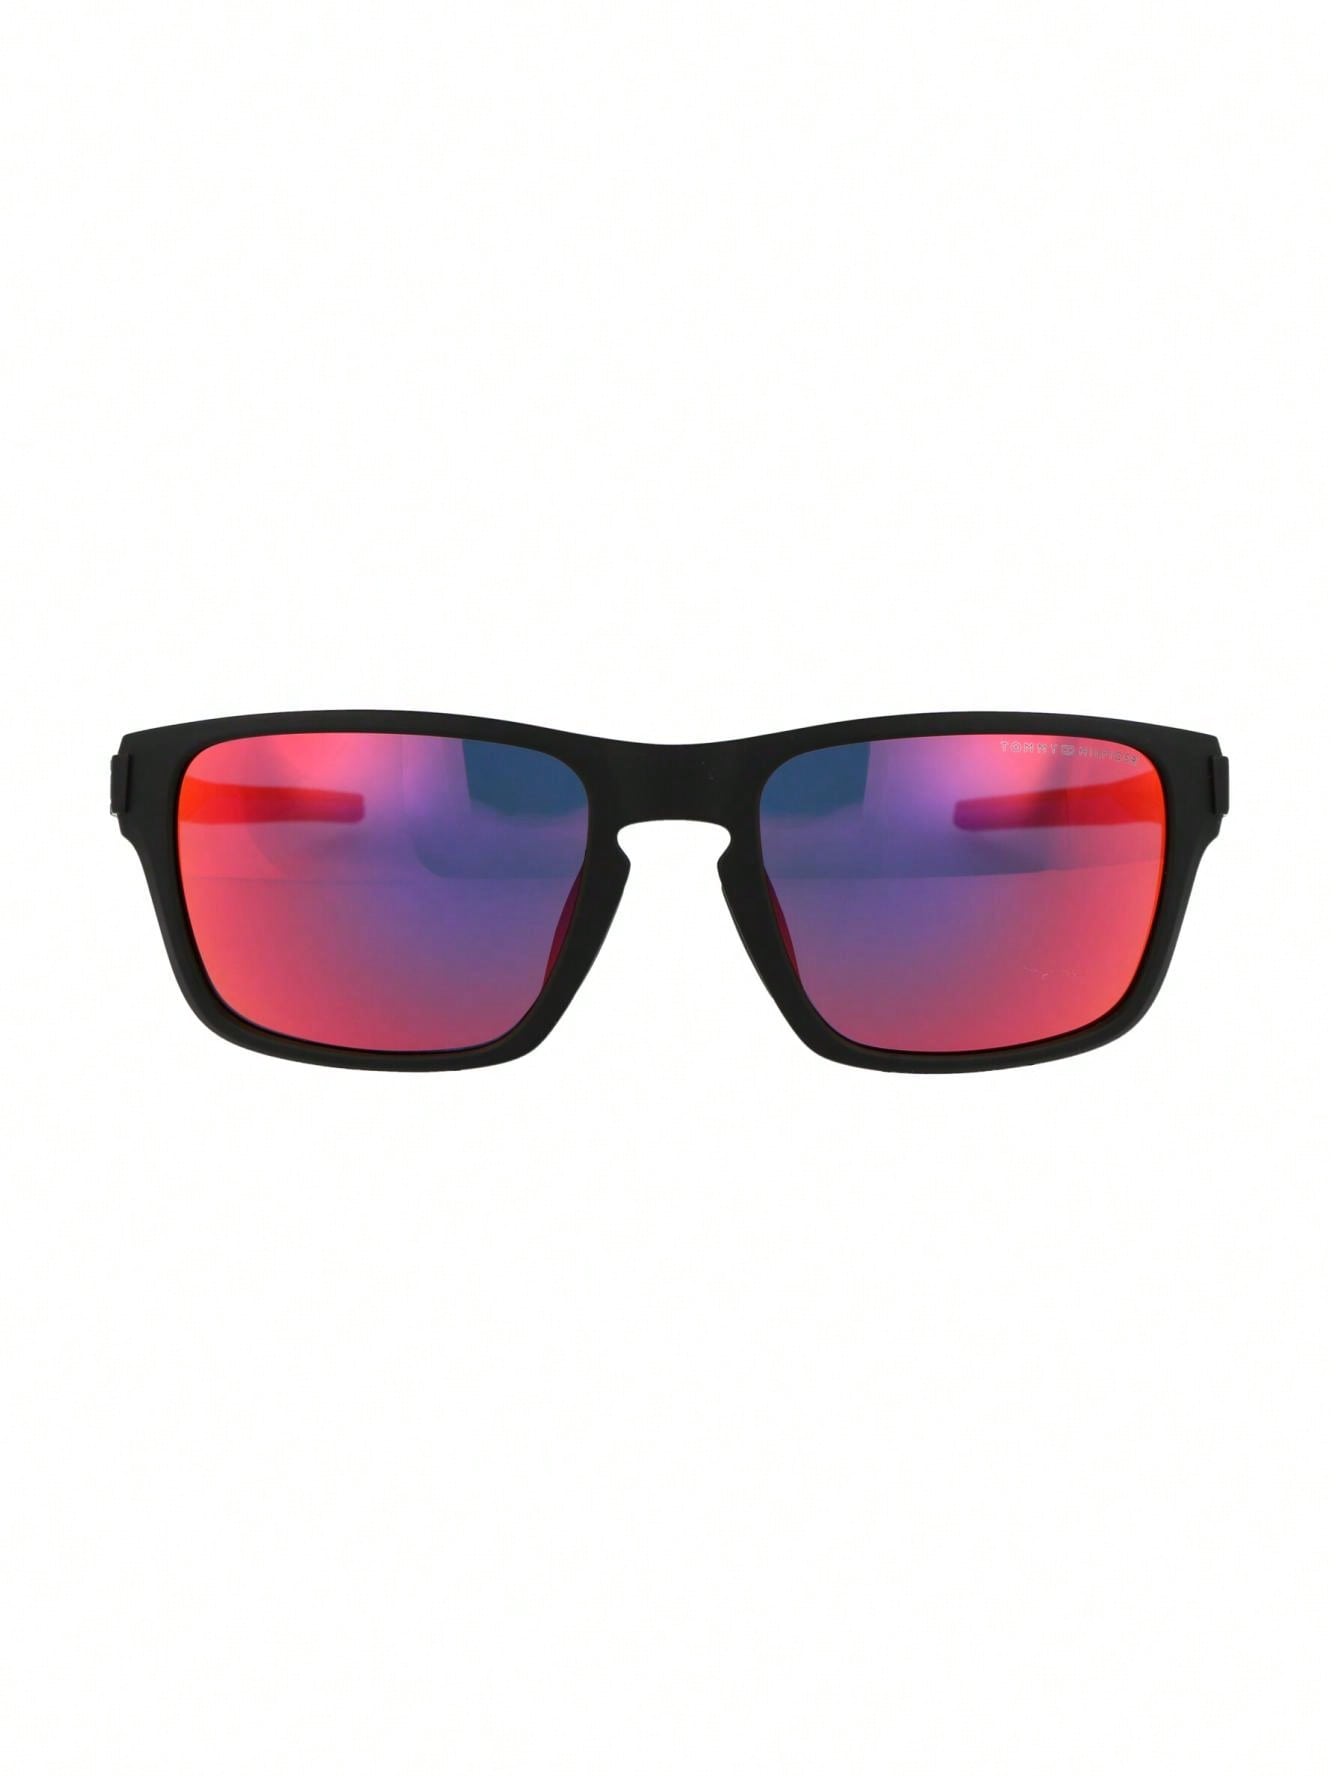 Мужские солнцезащитные очки Tommy Hilfiger DECOR TH1952S0VKPL, многоцветный солнцезащитные очки tommy hilfiger